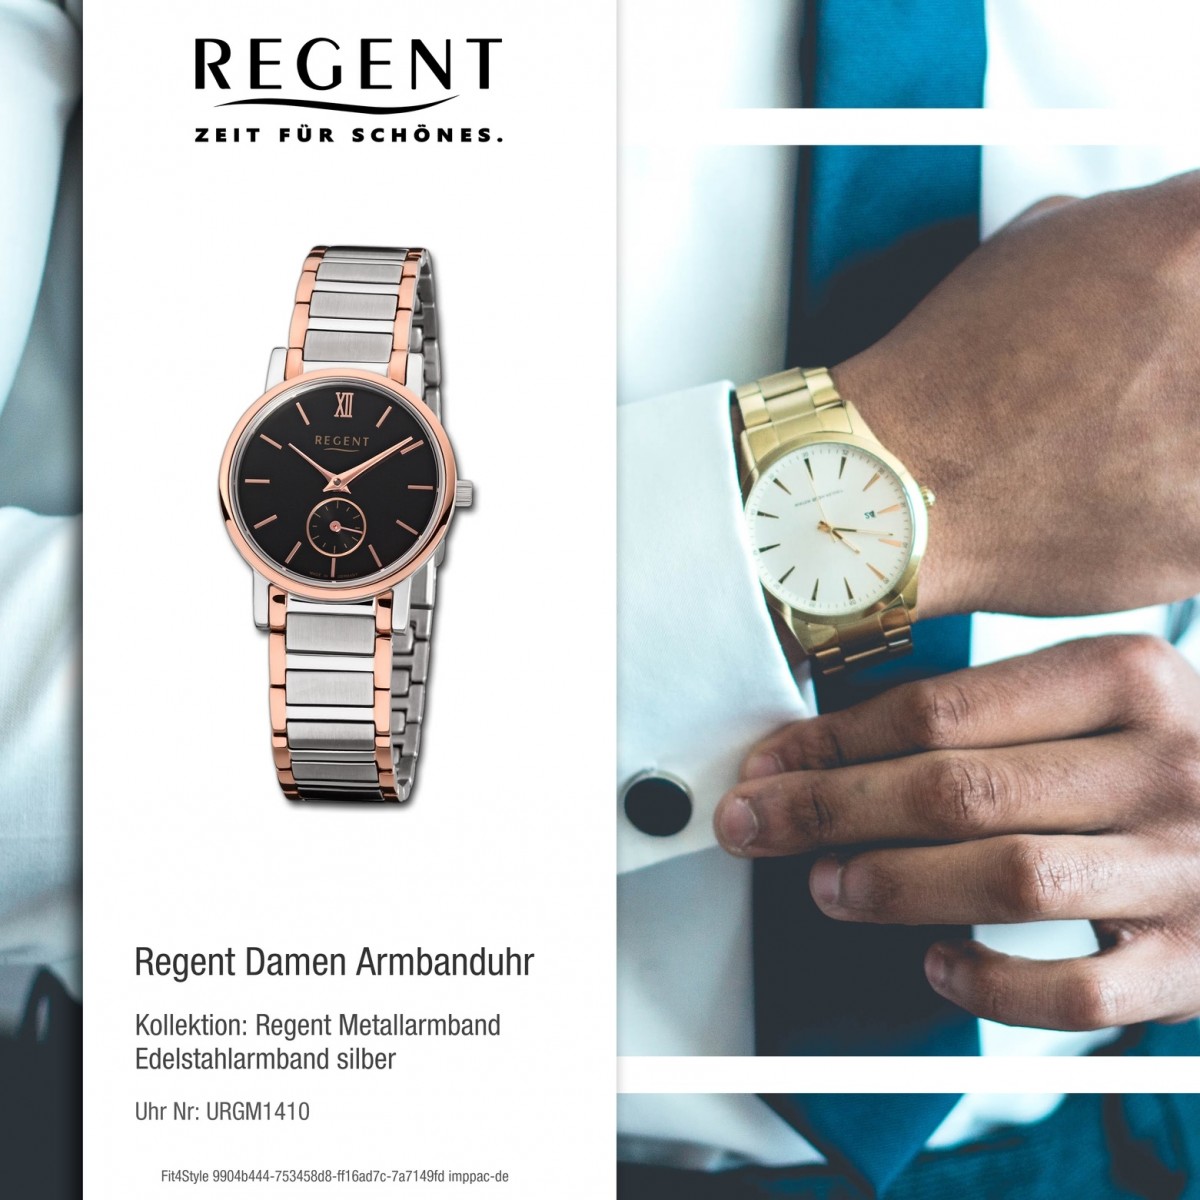 Damen-Armbanduhr silber Uhr rosegold Quarz-Uhr Edelstahl-Armband URGM1410 Regent